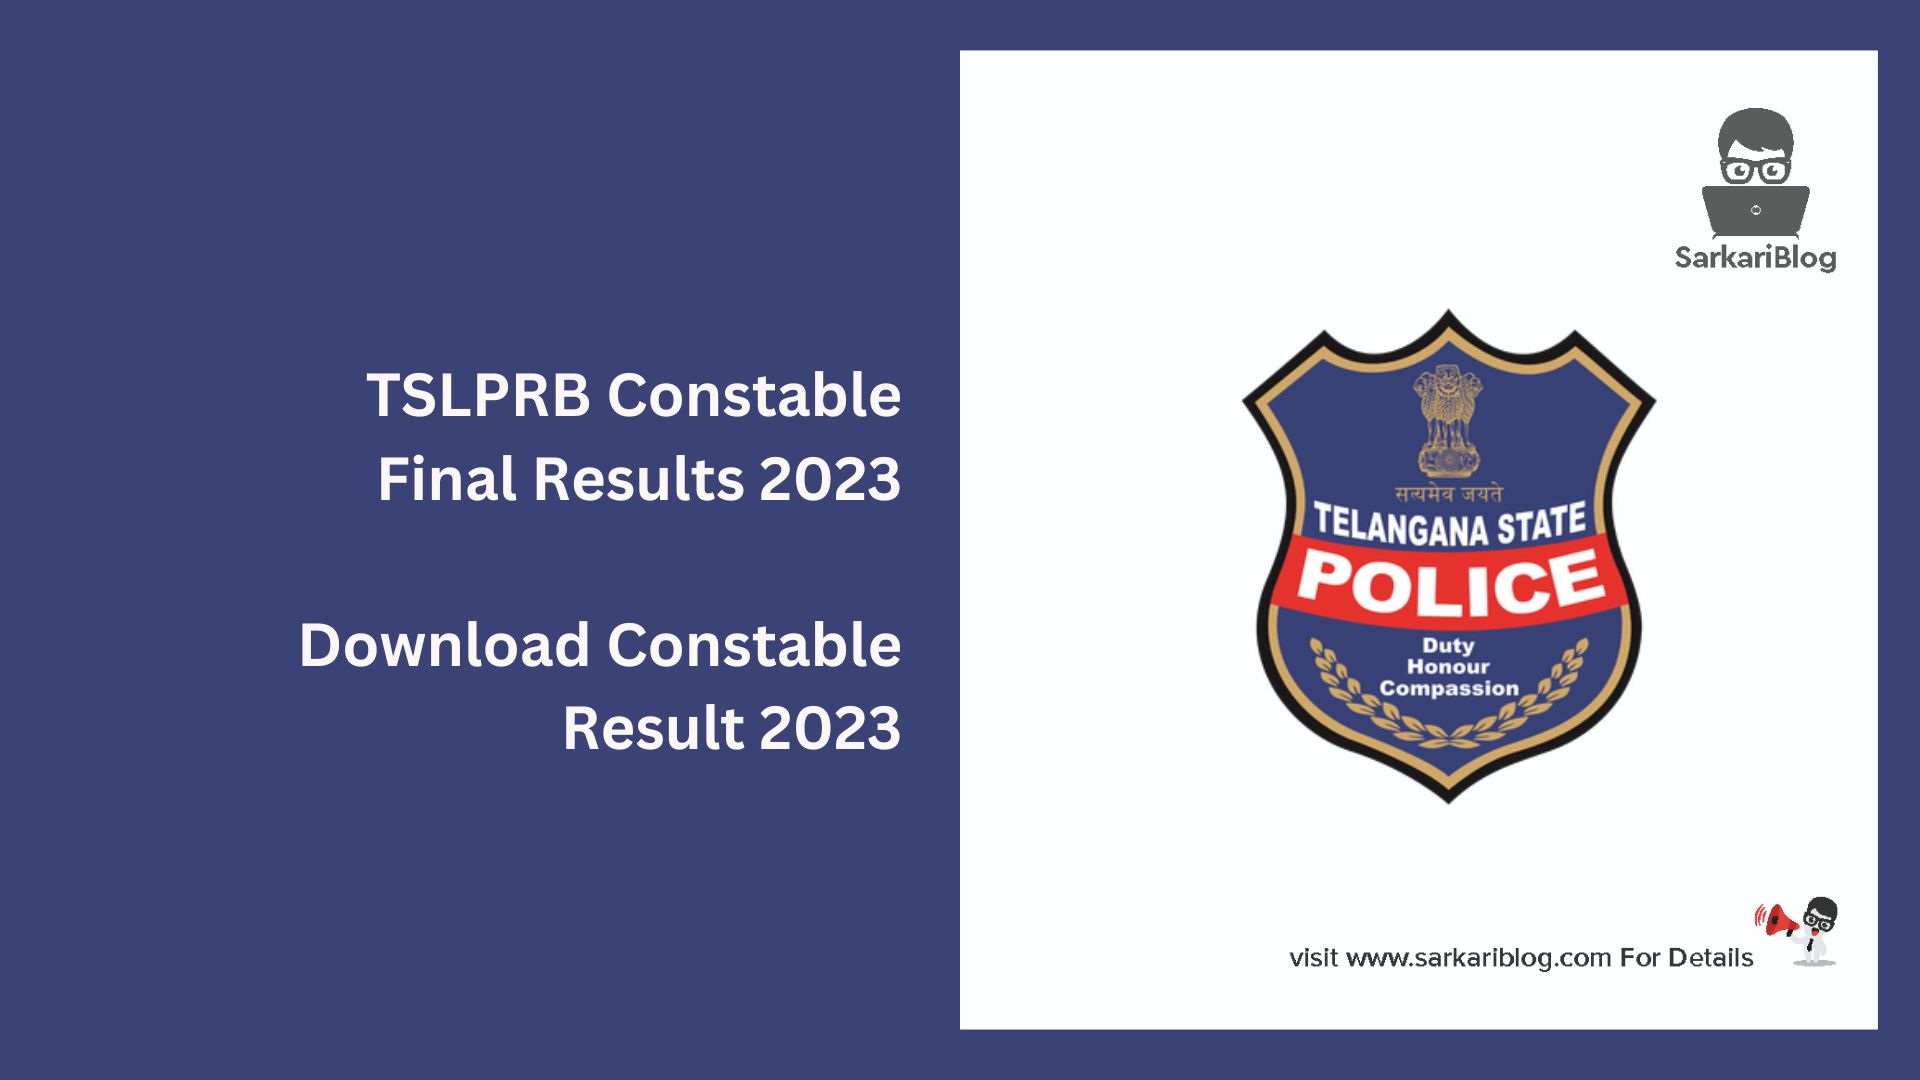 TSLPRB Constable Final Results 2023